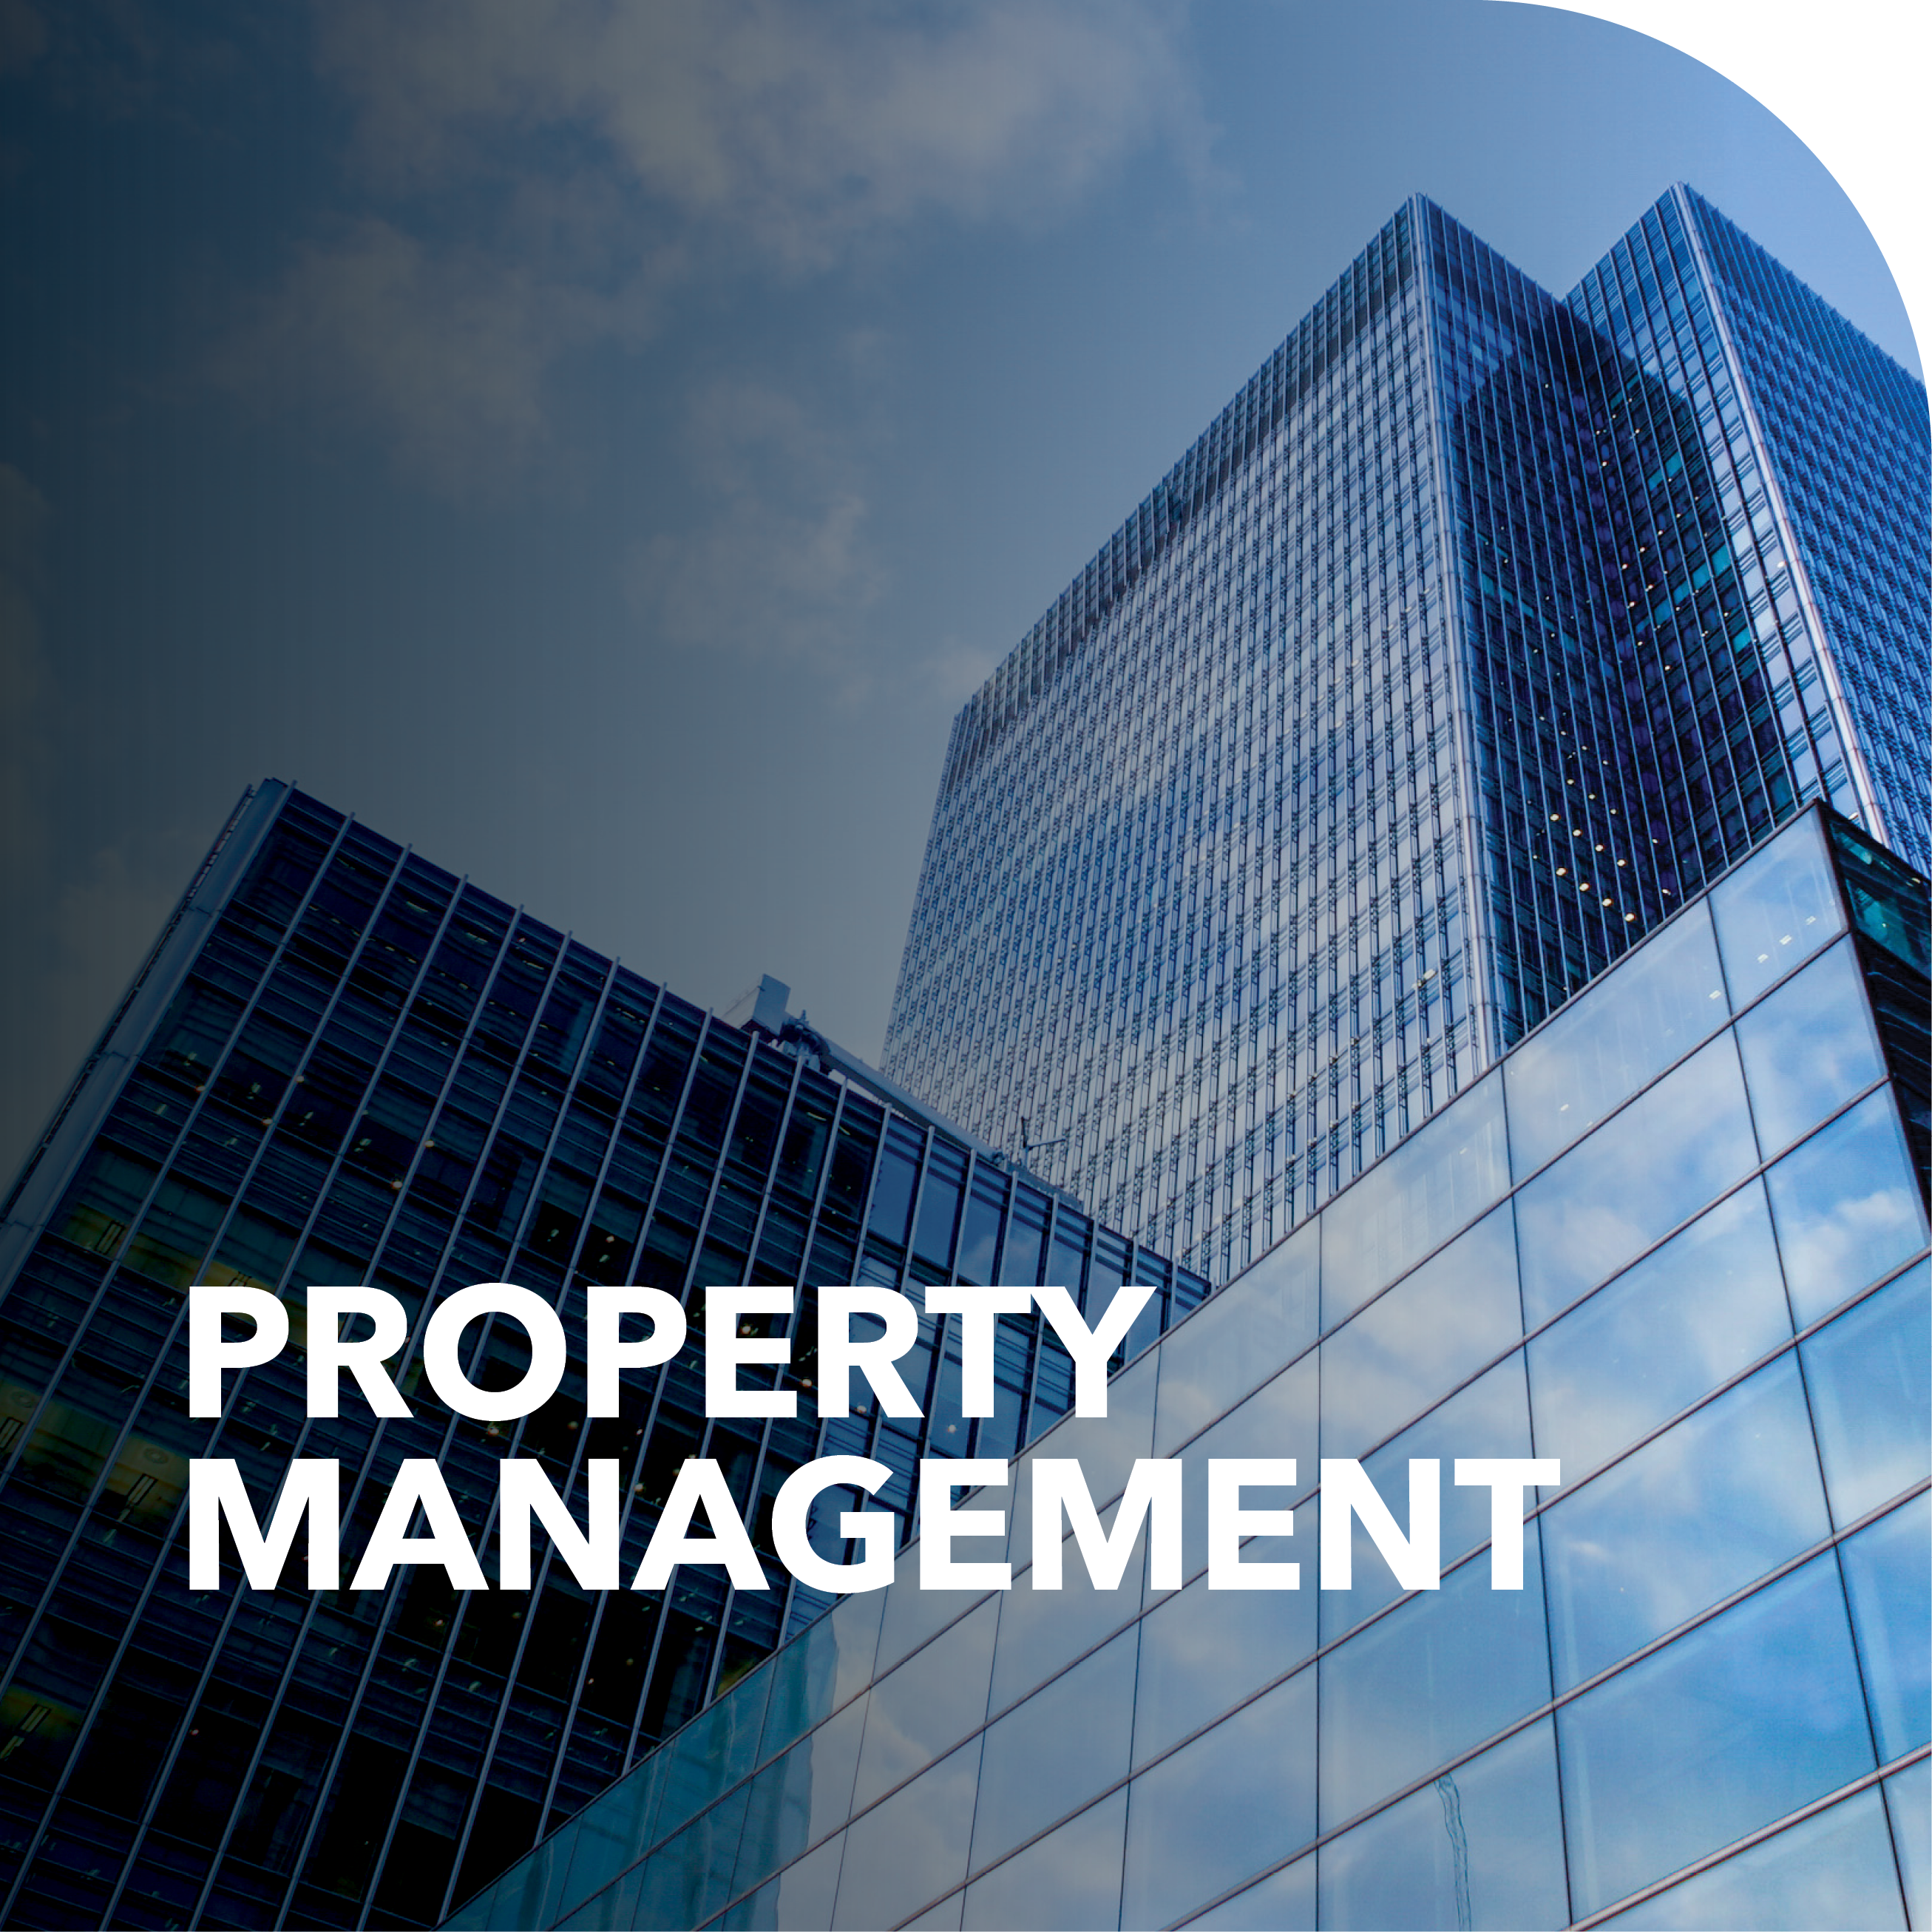 Boston property management